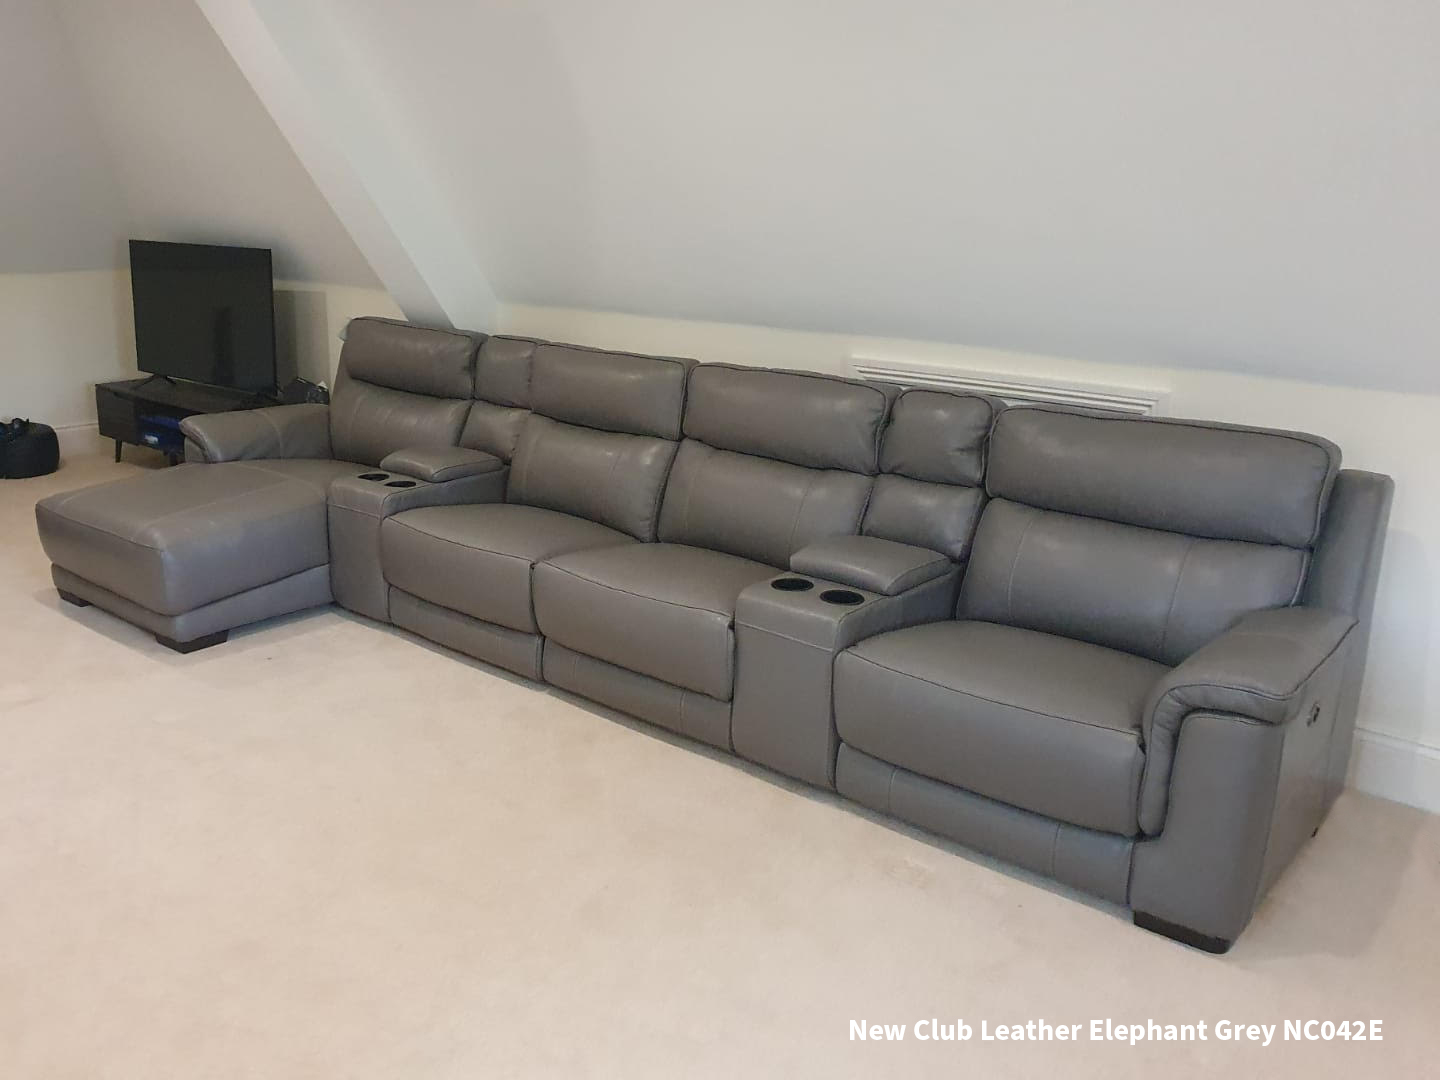 FrontRow™ Luno Home Cinema Seating New Club Leather Elephant Grey NC042E